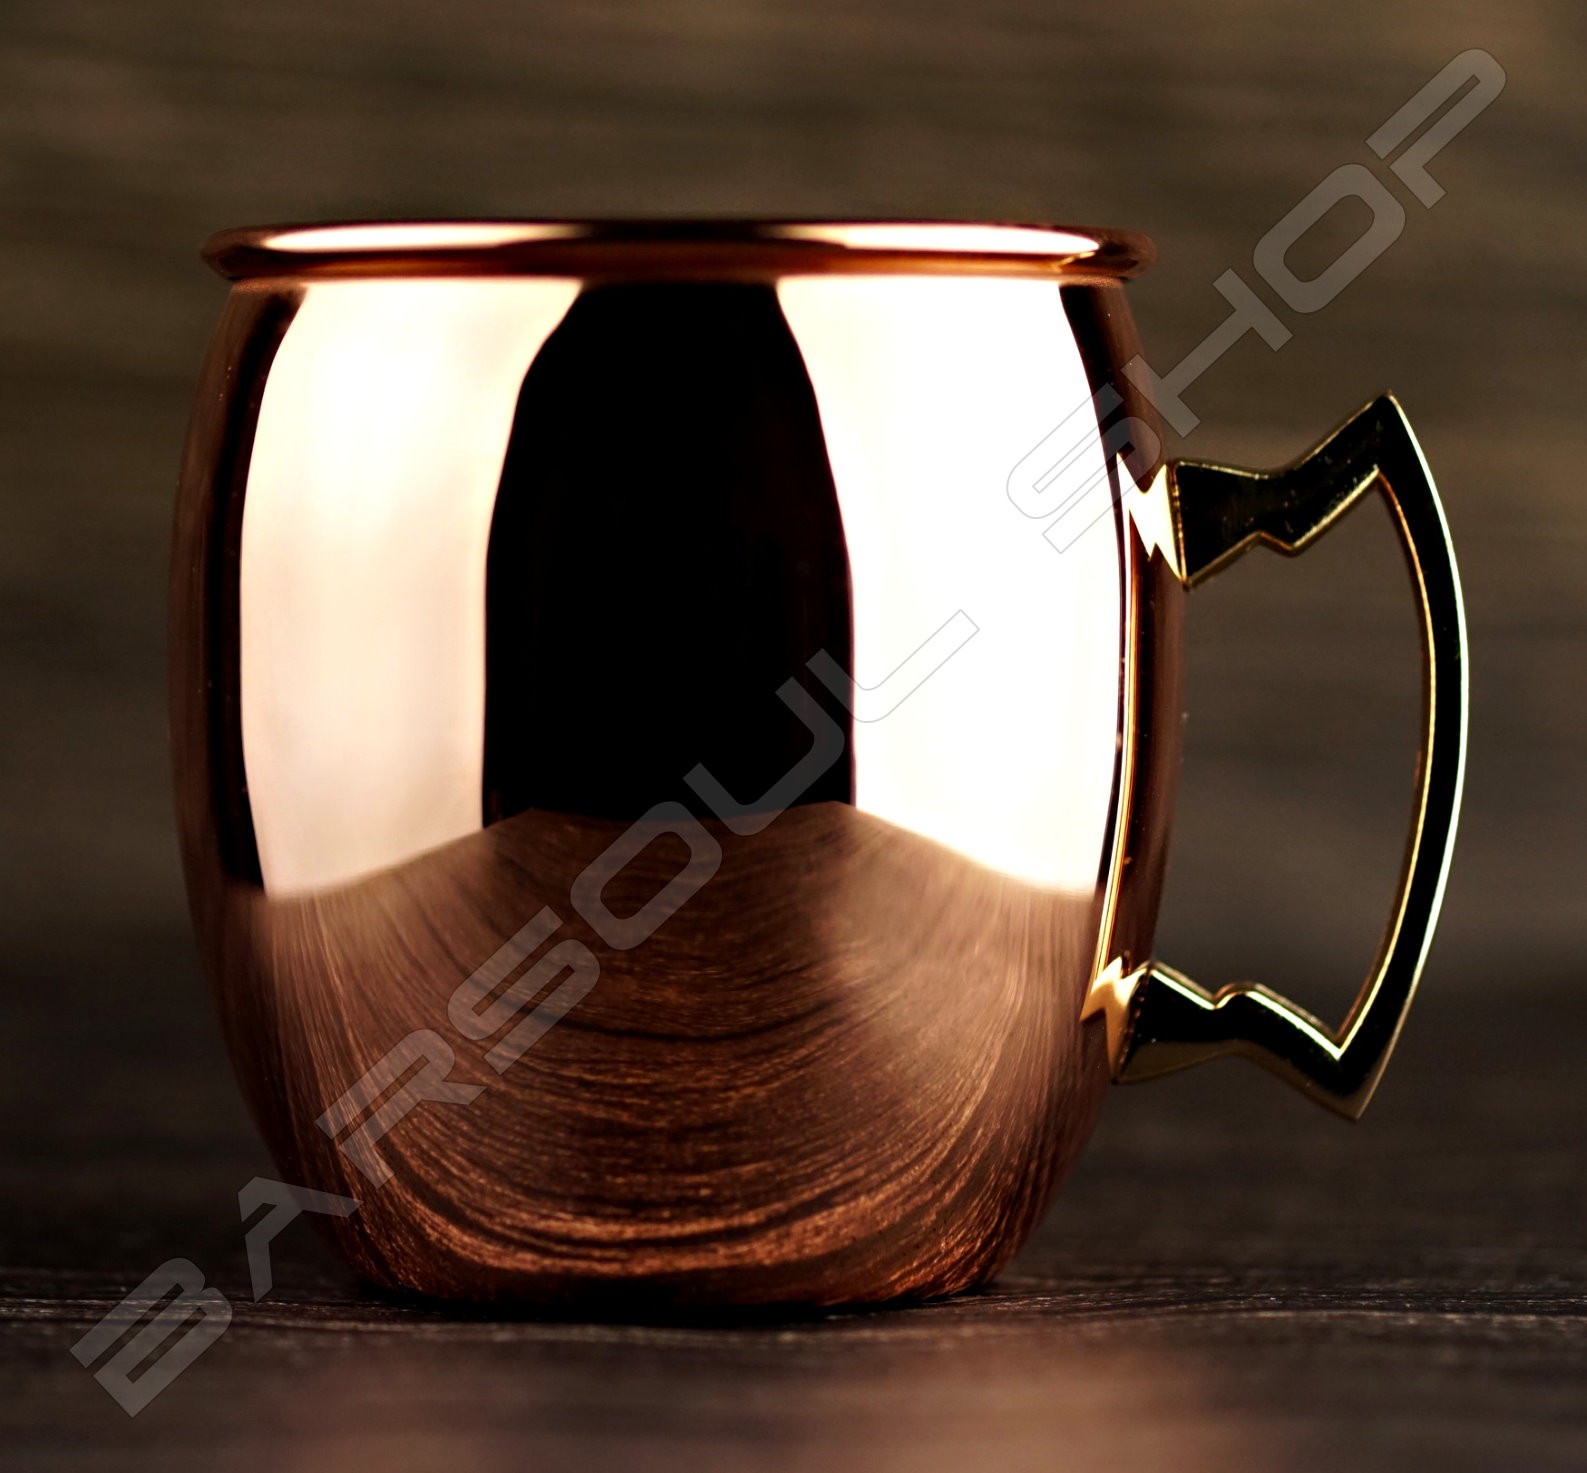 驢子鍍銅杯(鏡面)500ml Donkey copper cup(bright)